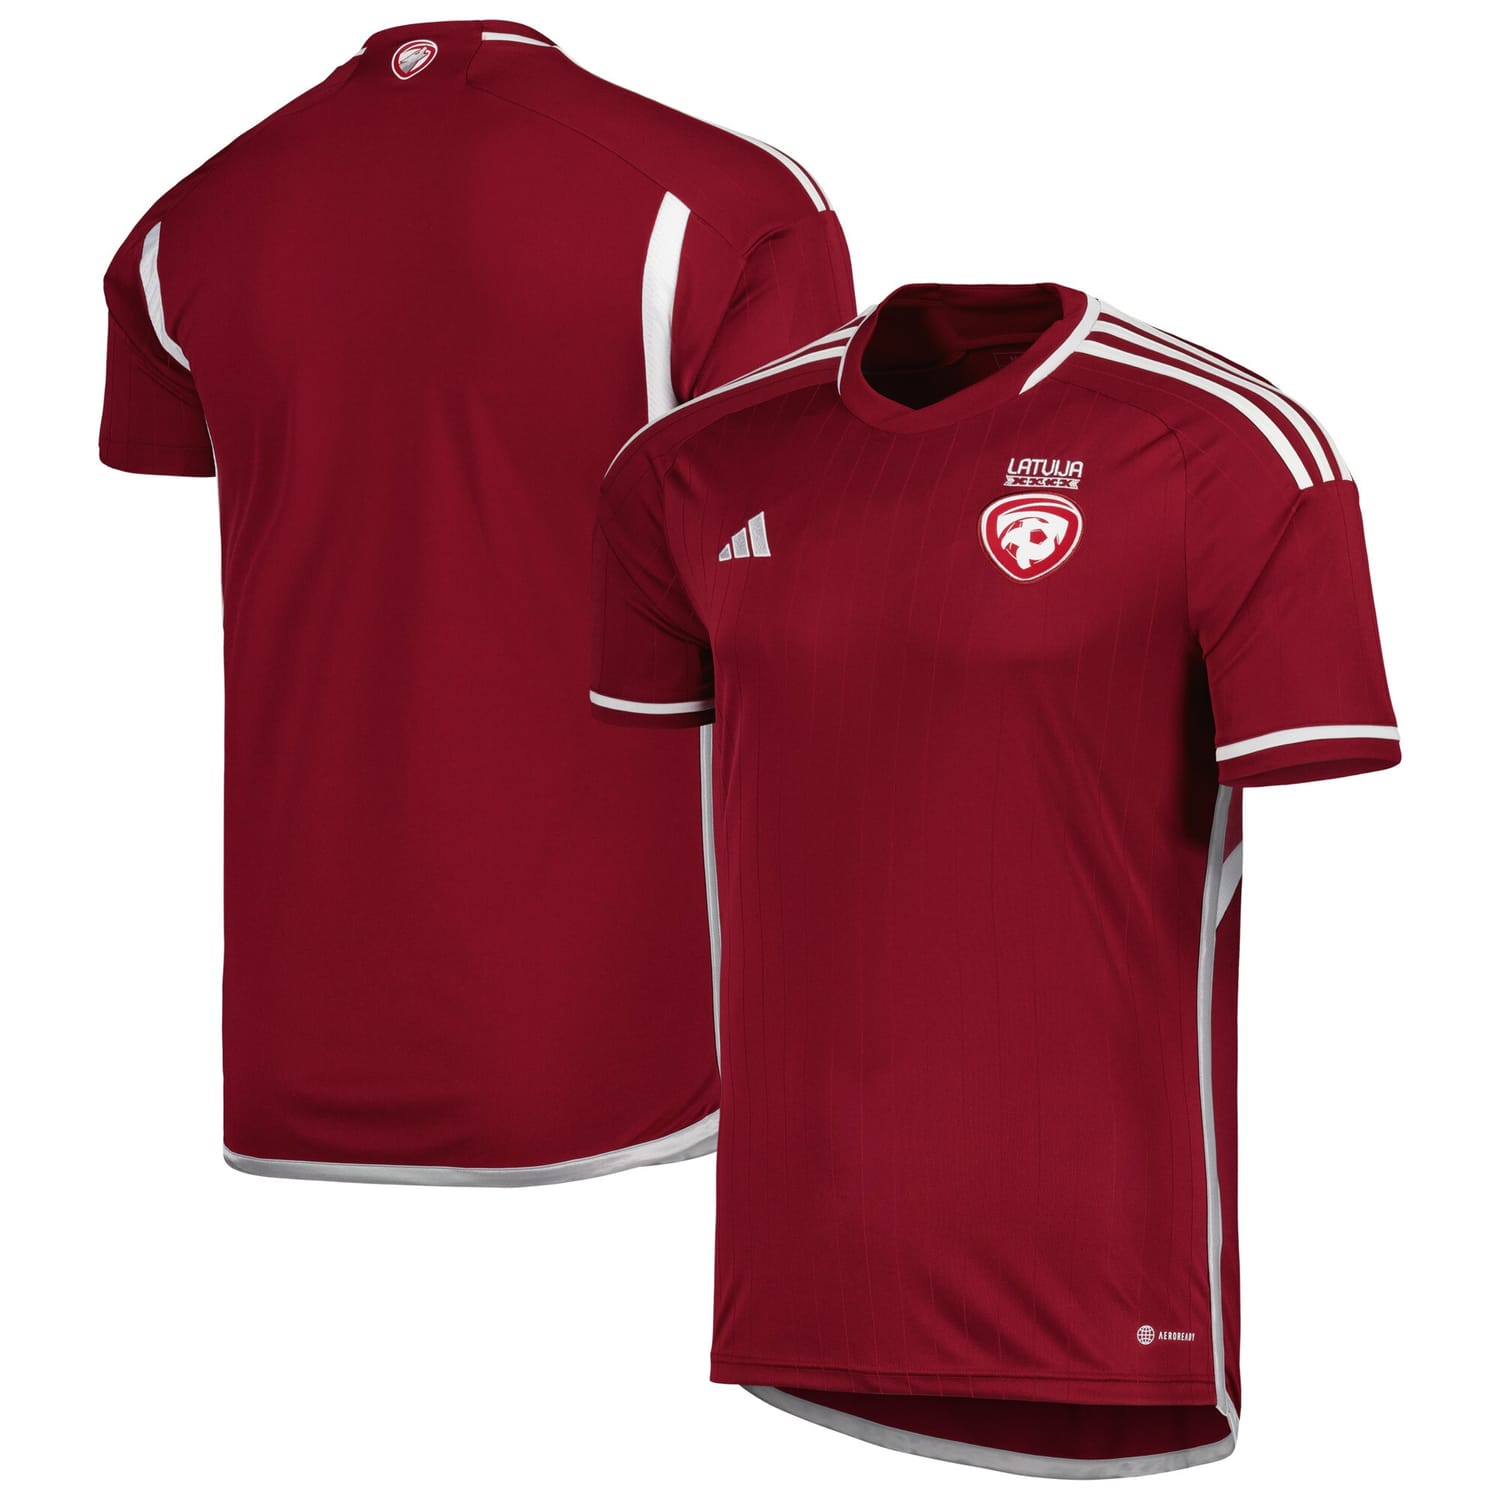 Latvia National Team Home Jersey Shirt Burgundy 2022-23 for Men